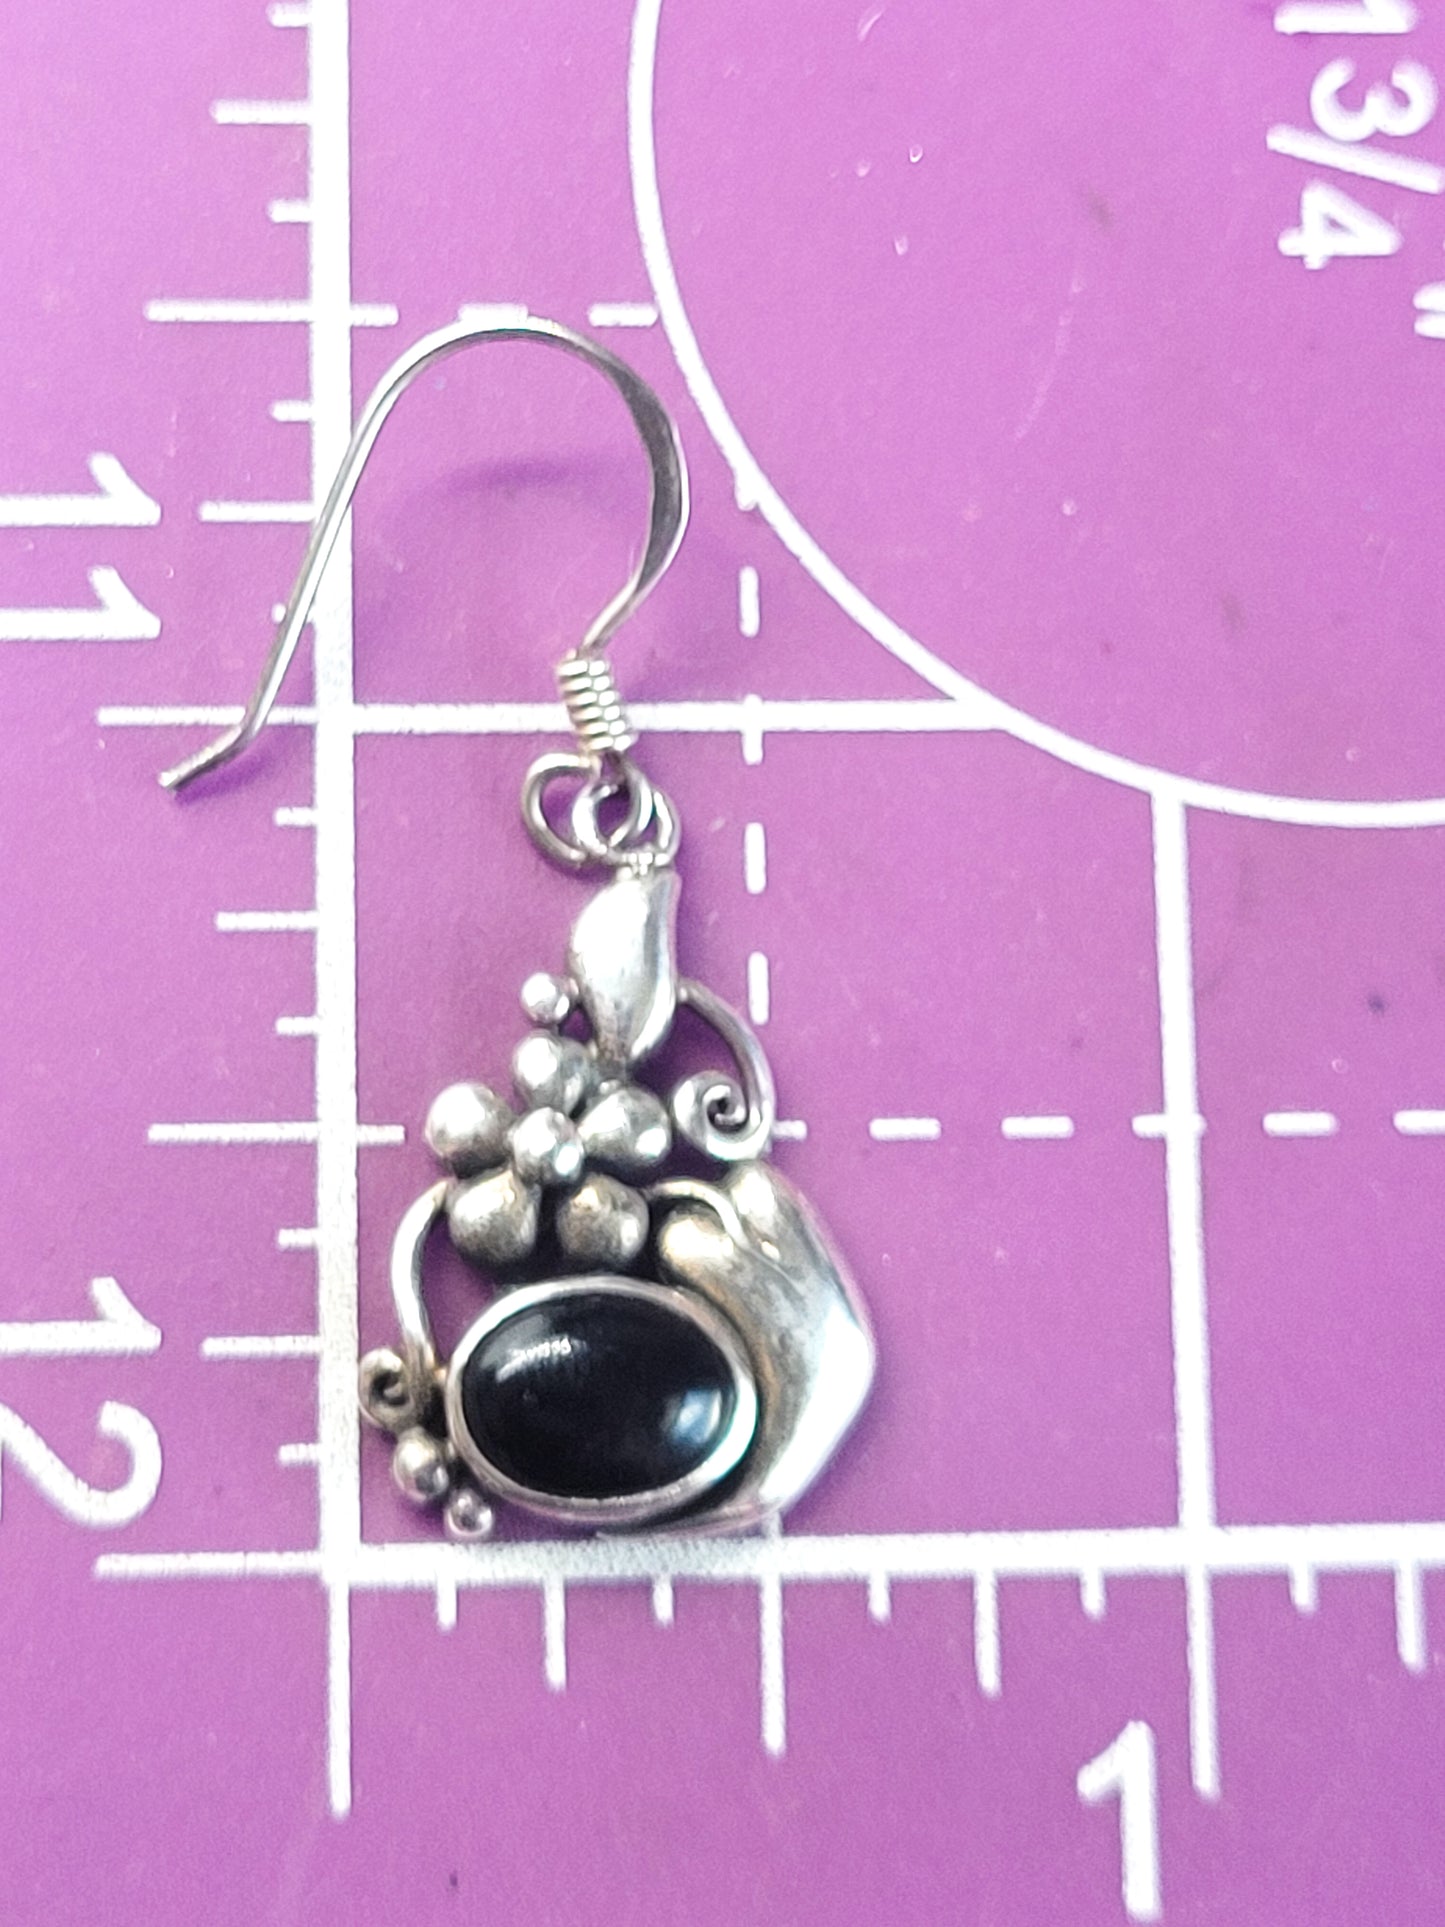 Boma Black onyx Southwestern style vintage flower sterling silver earrings